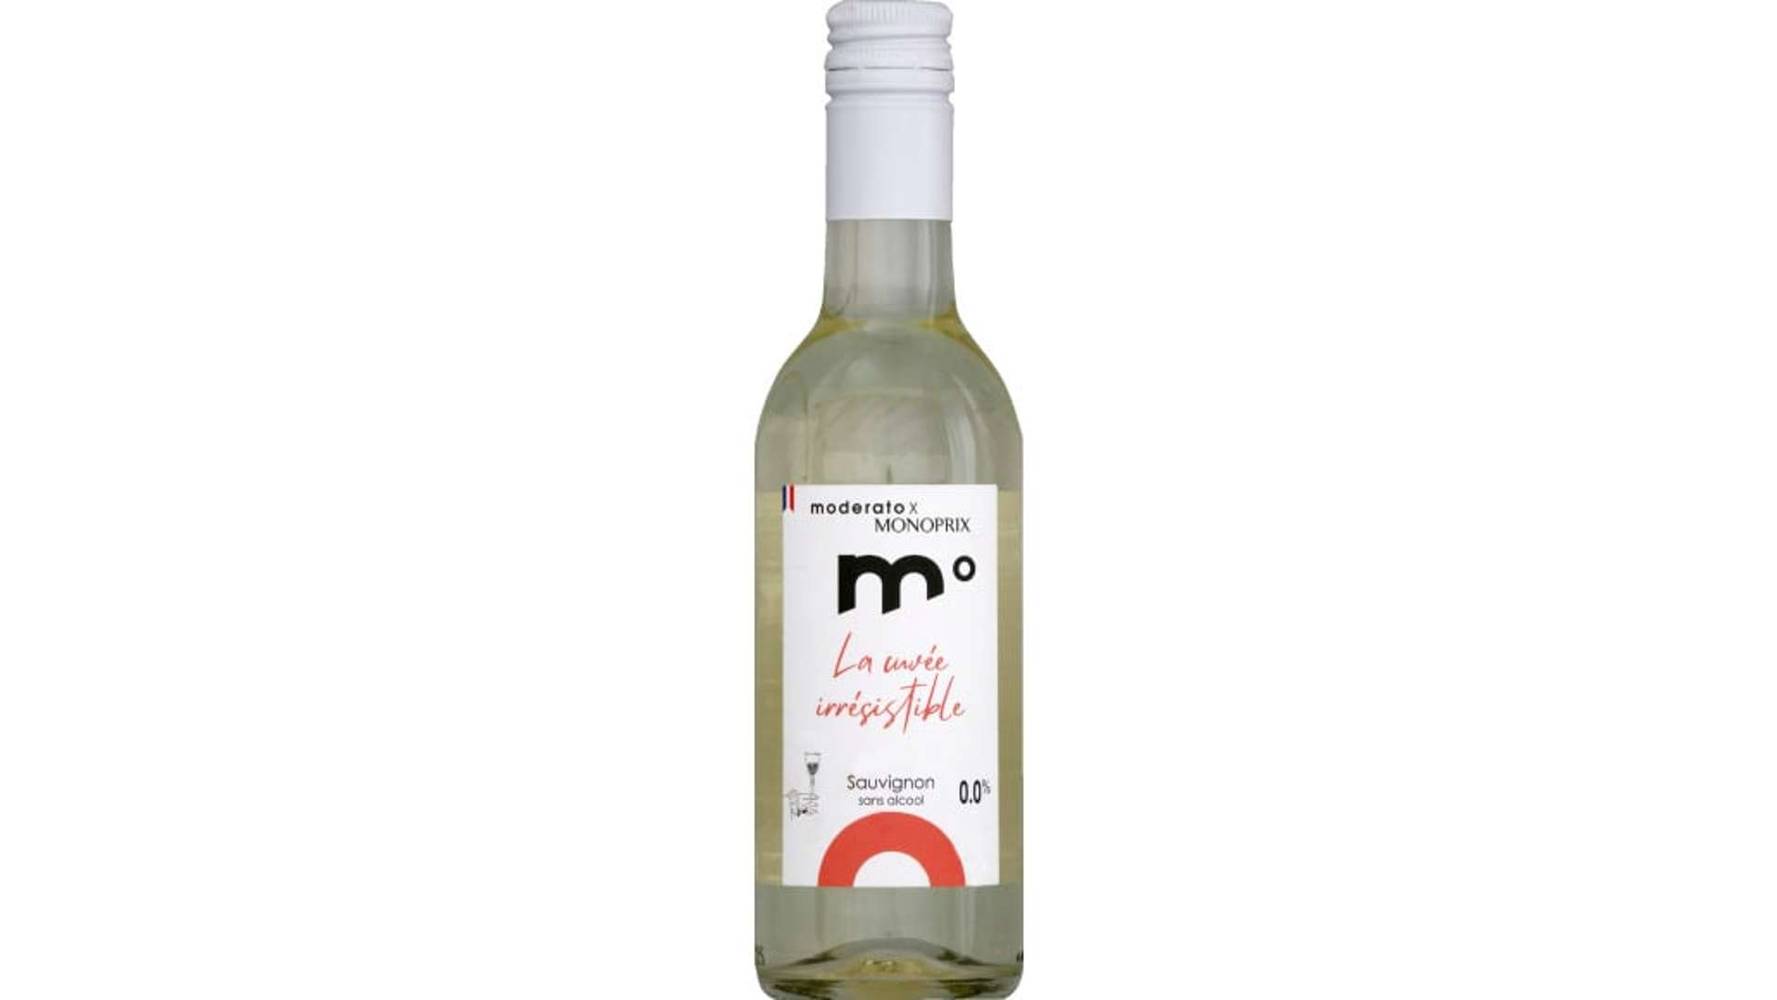 Monderato X Monoprix - Vin blanc sans alcool (250 ml) (sauvignon)